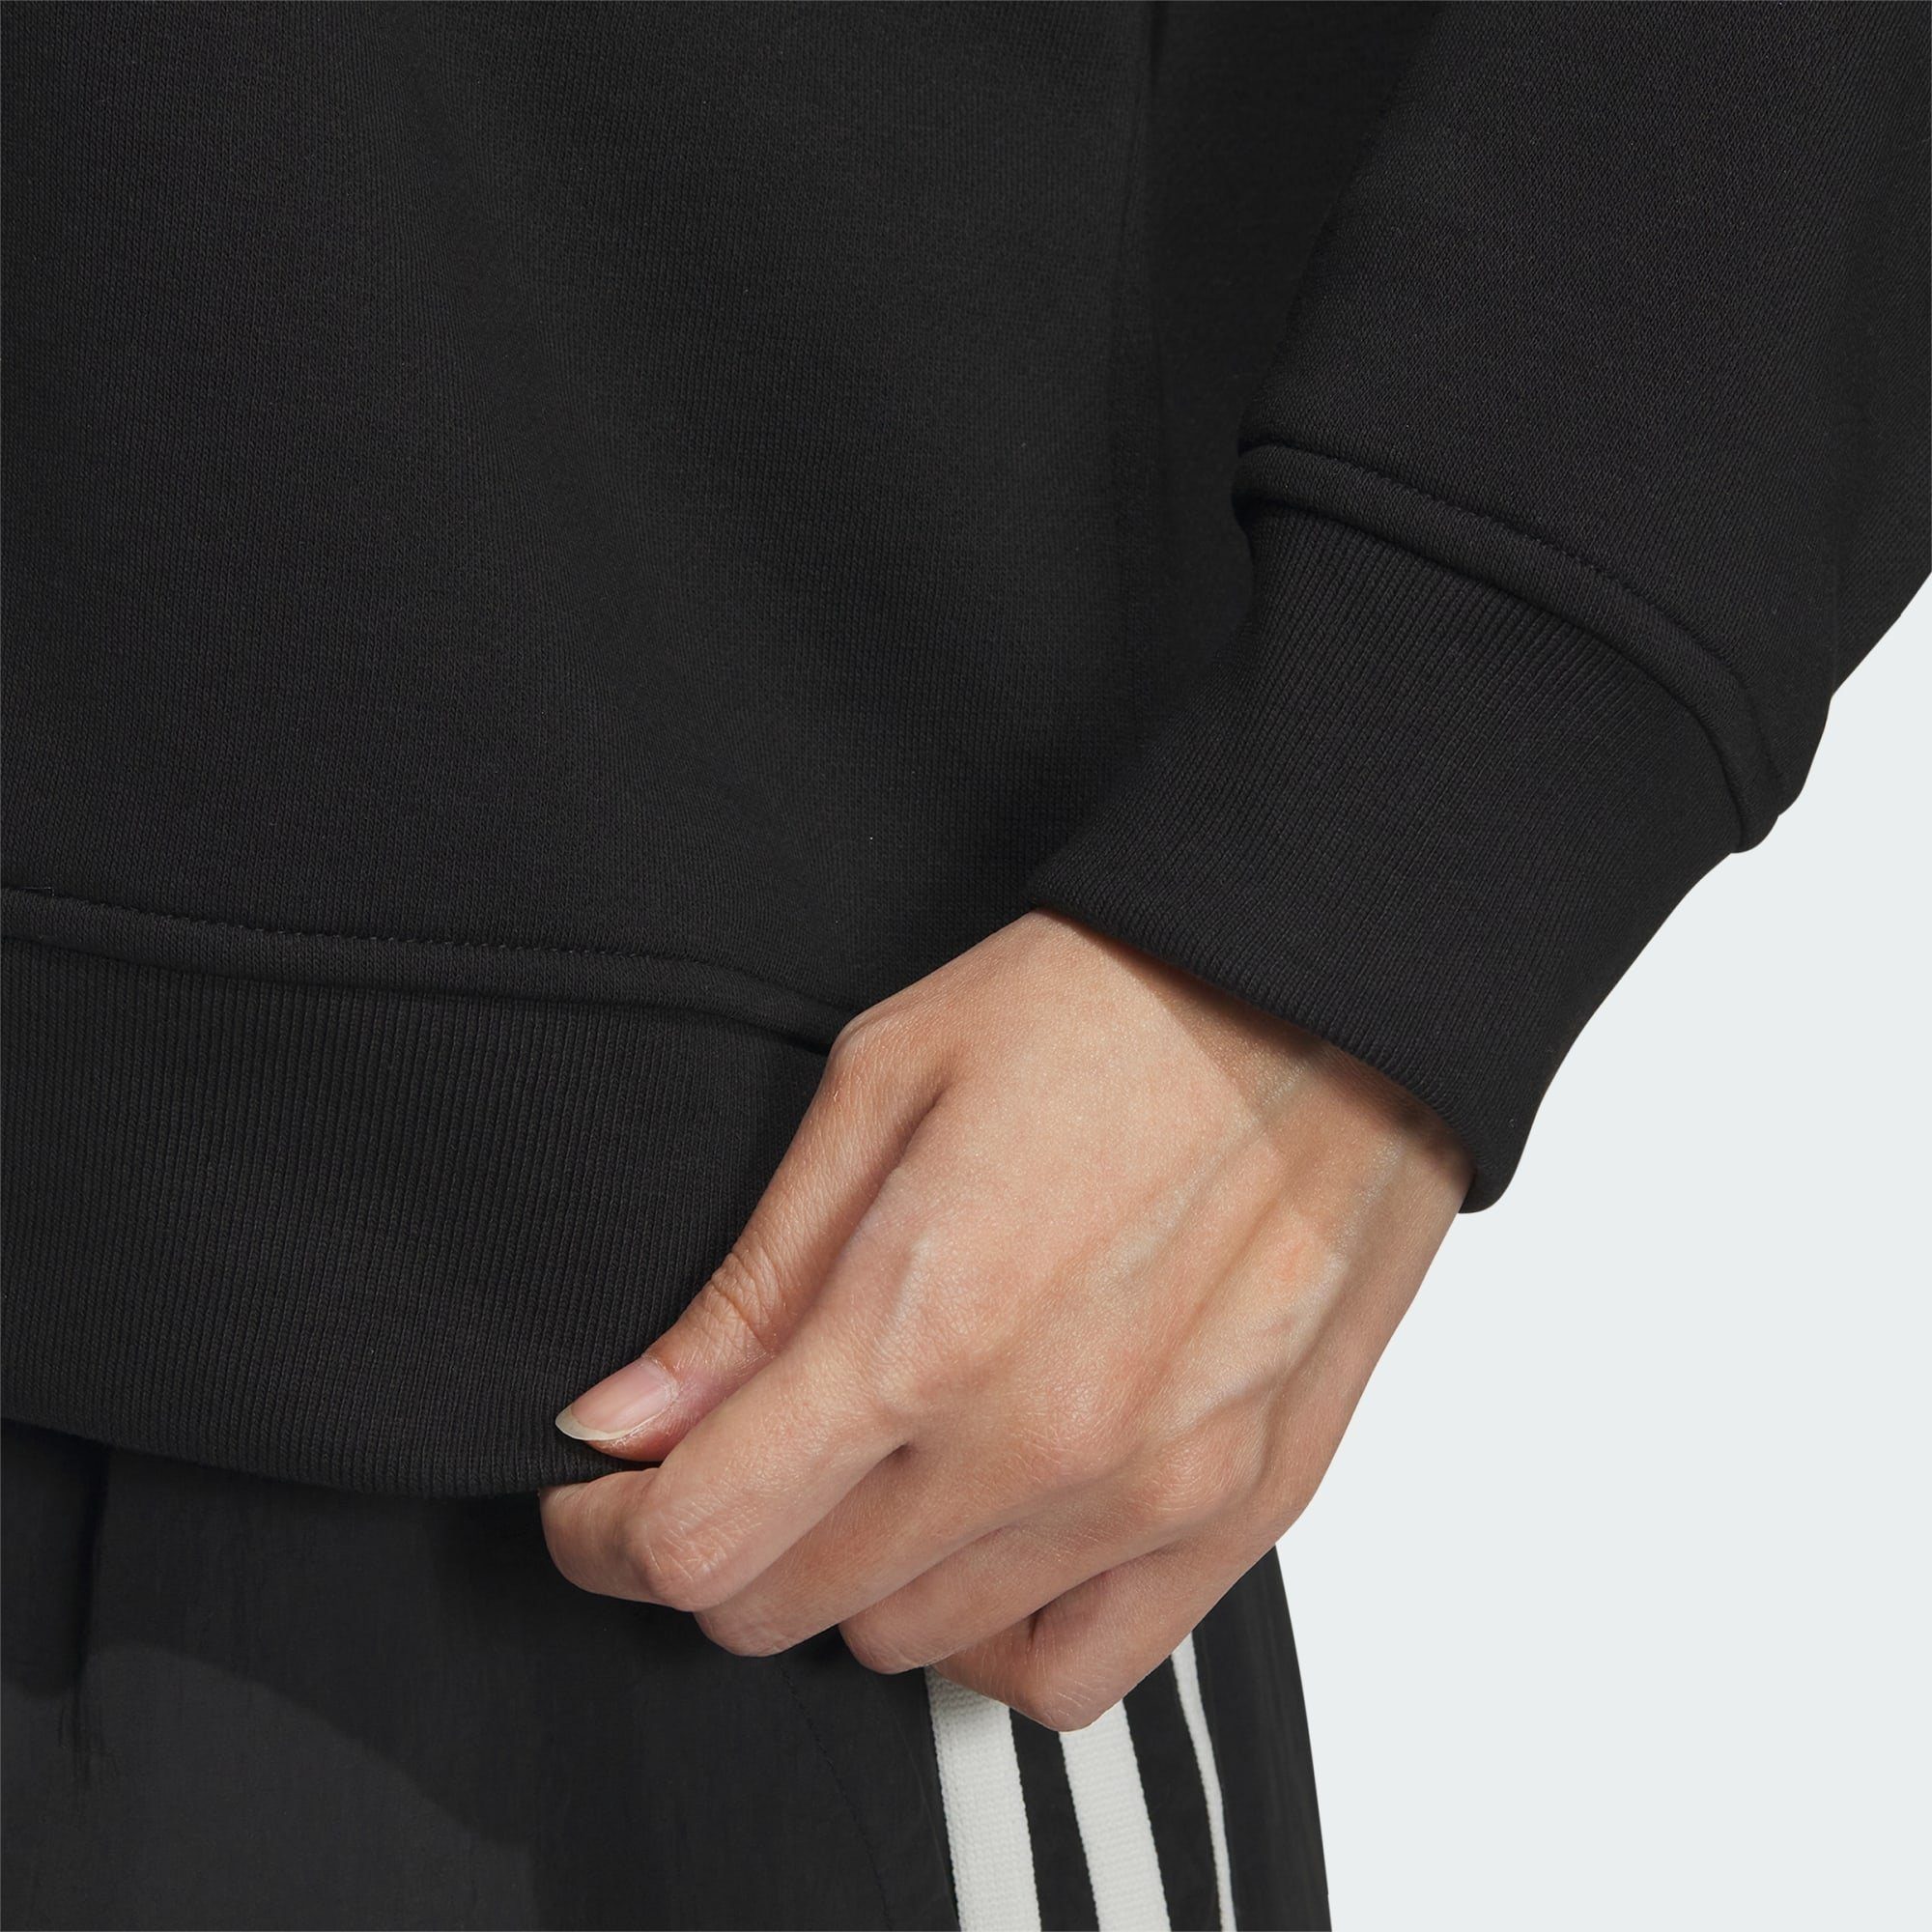 ESSENTIALS SWEATSHIRT Originals 1/2 Sweatshirt ZIP Black adidas